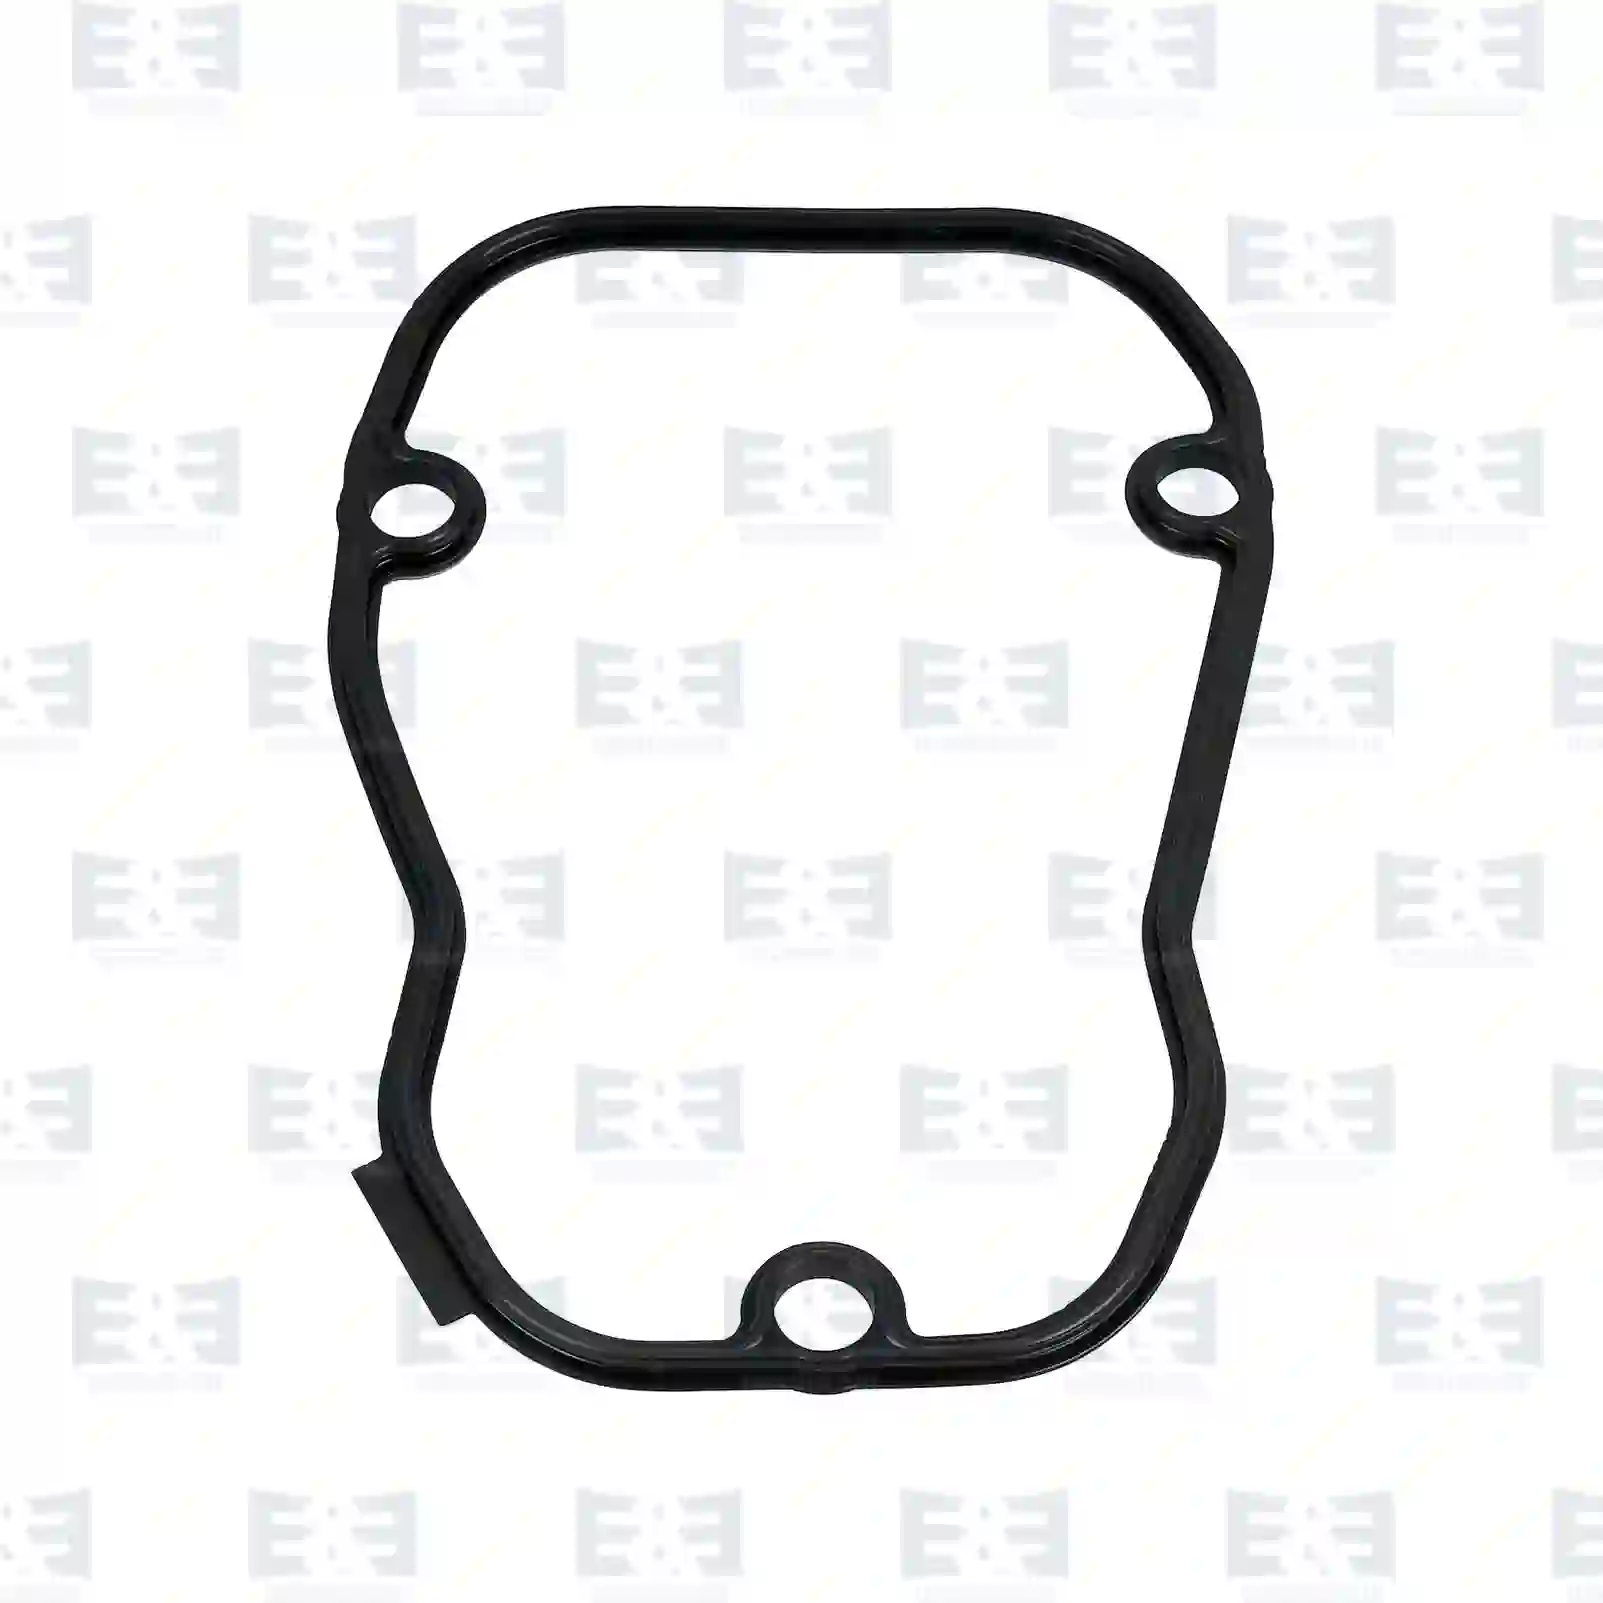  Valve cover gasket, upper || E&E Truck Spare Parts | Truck Spare Parts, Auotomotive Spare Parts